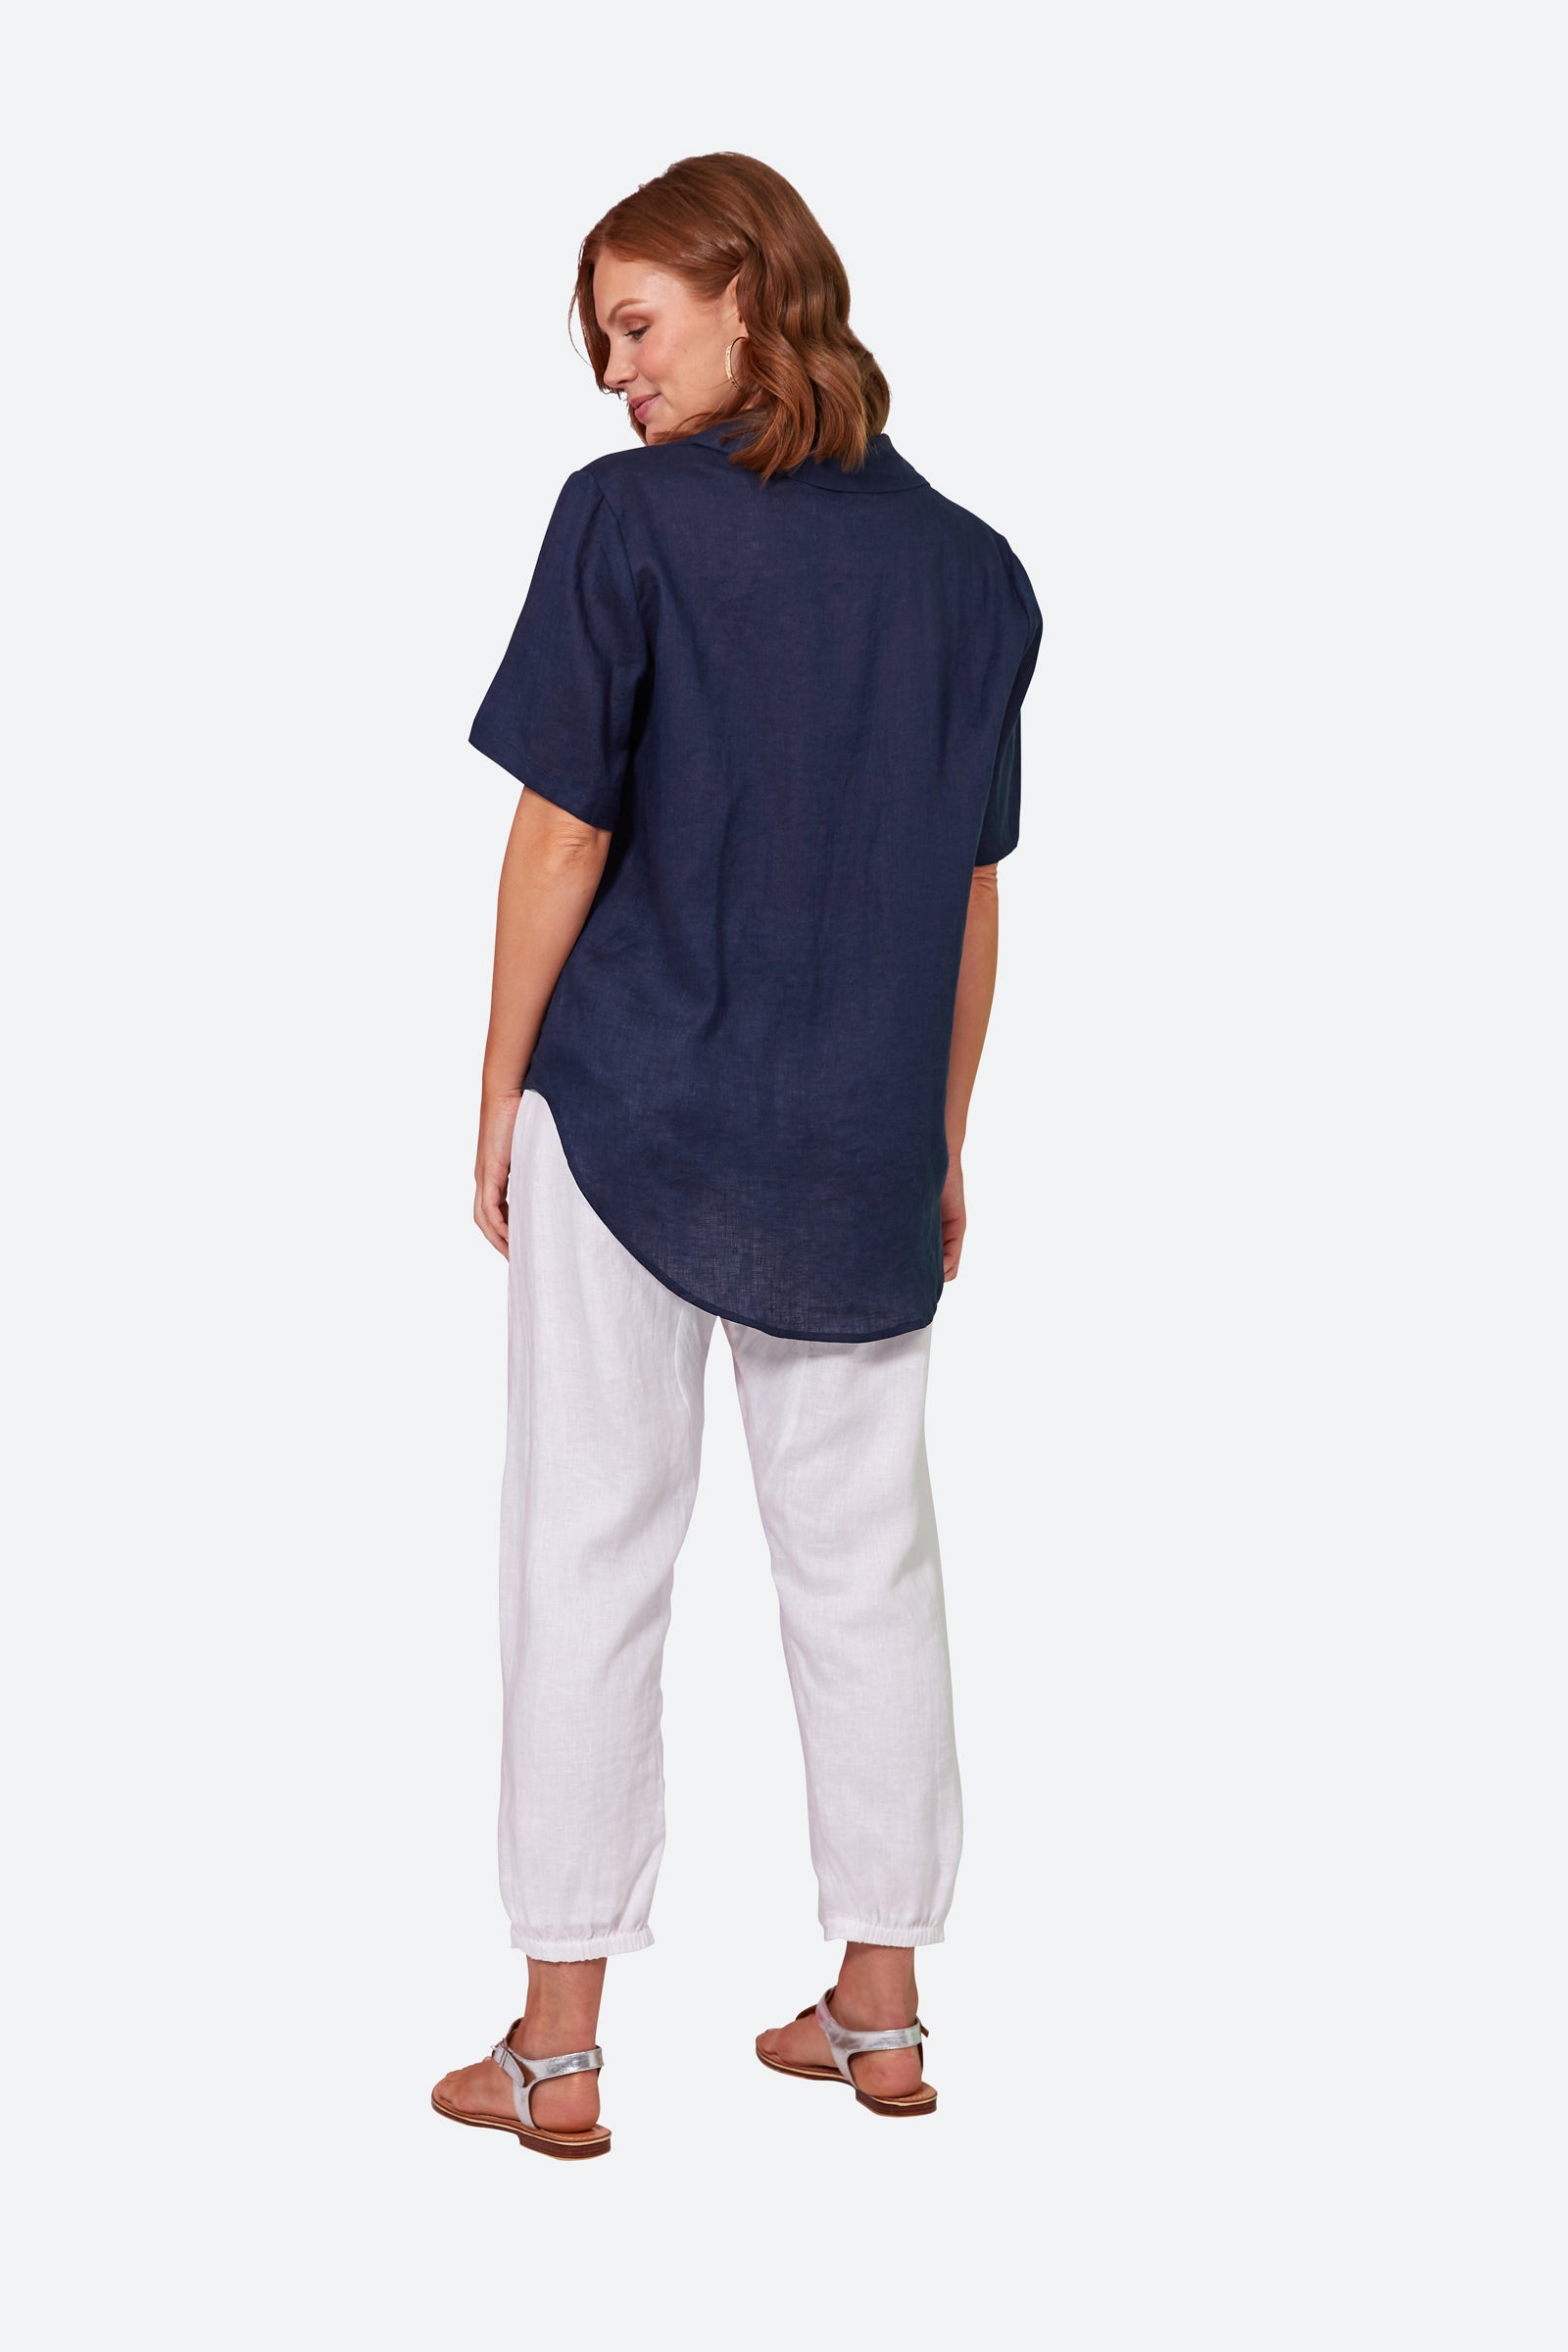 La Vie Shirt - Sapphire - eb&ive Clothing - Shirt S/S Linen